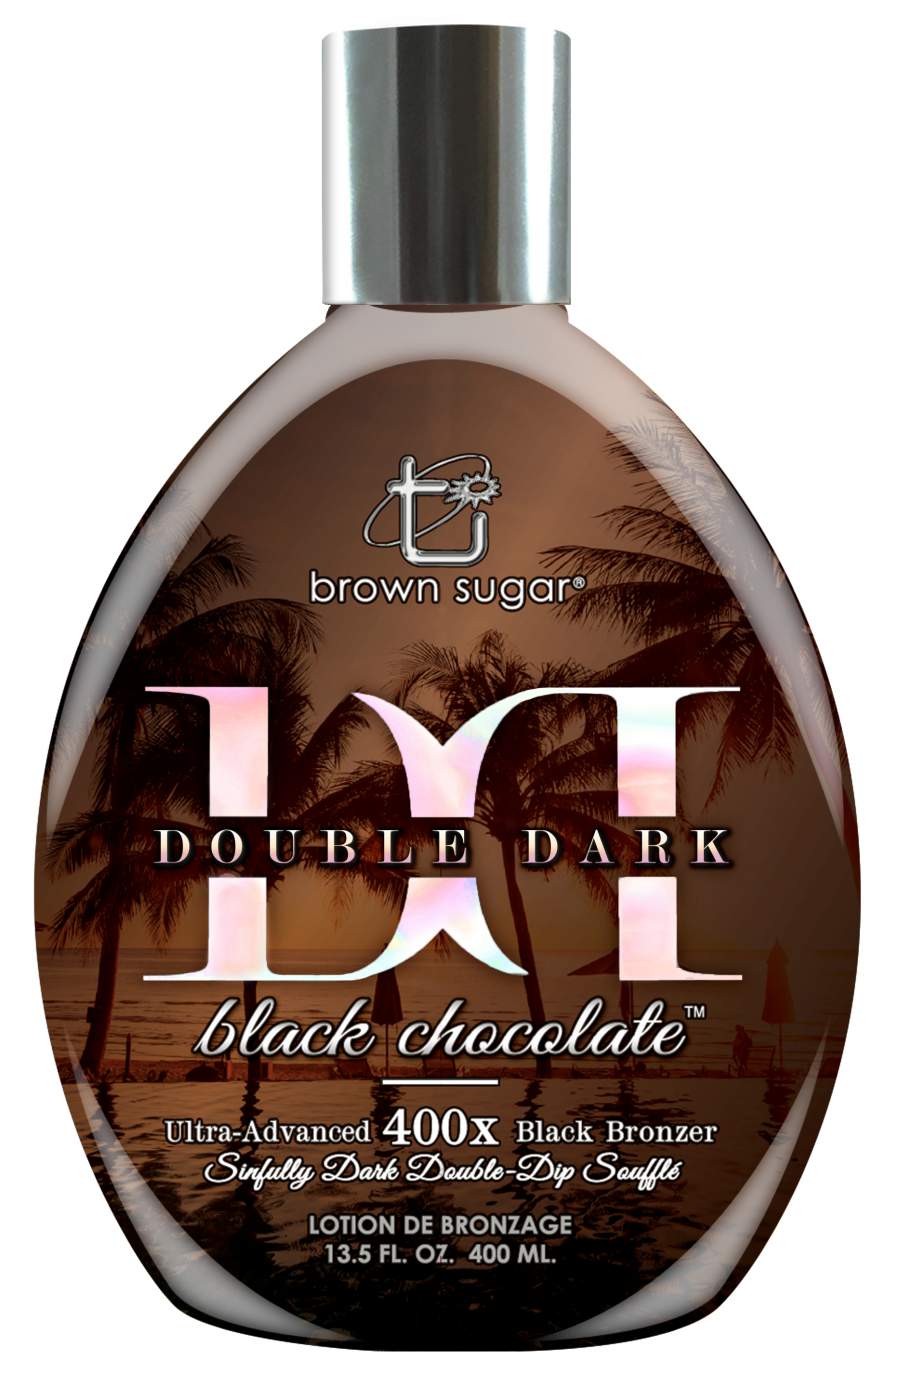 DOUBLE DARK BLACK CHOCOLATE 400x (400 ml)